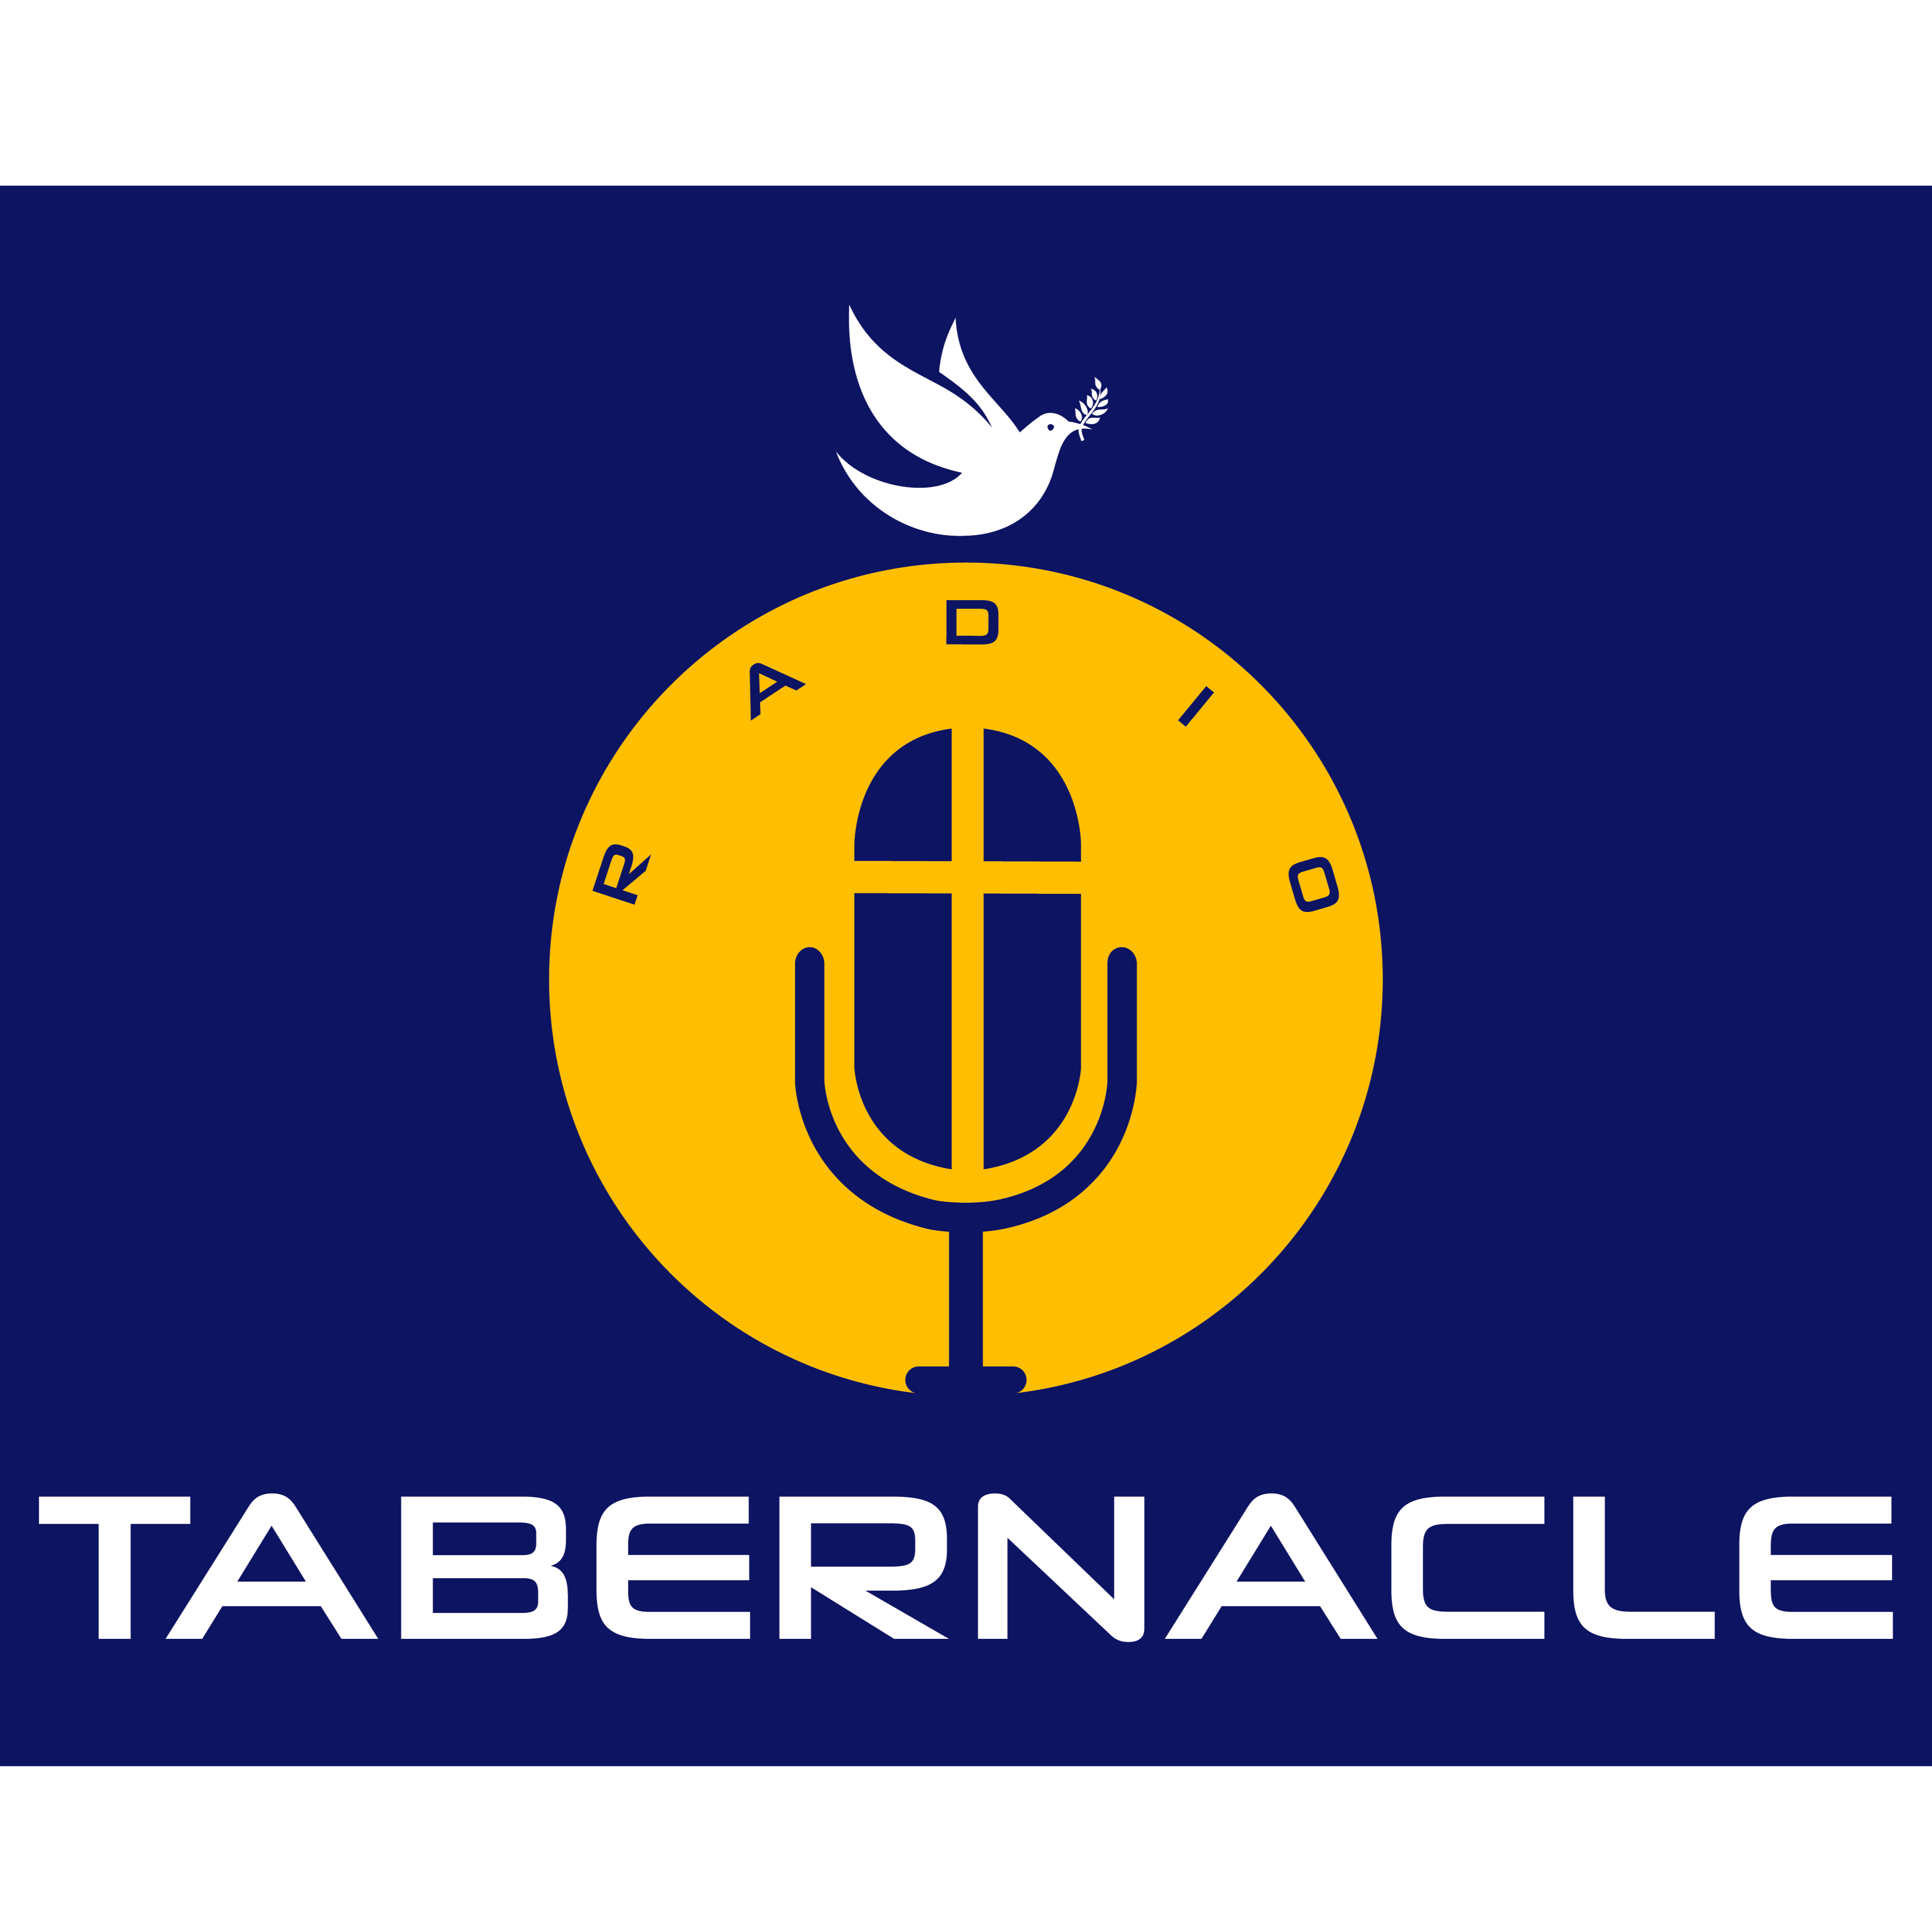 Radio Tele Tabernacle-Creole